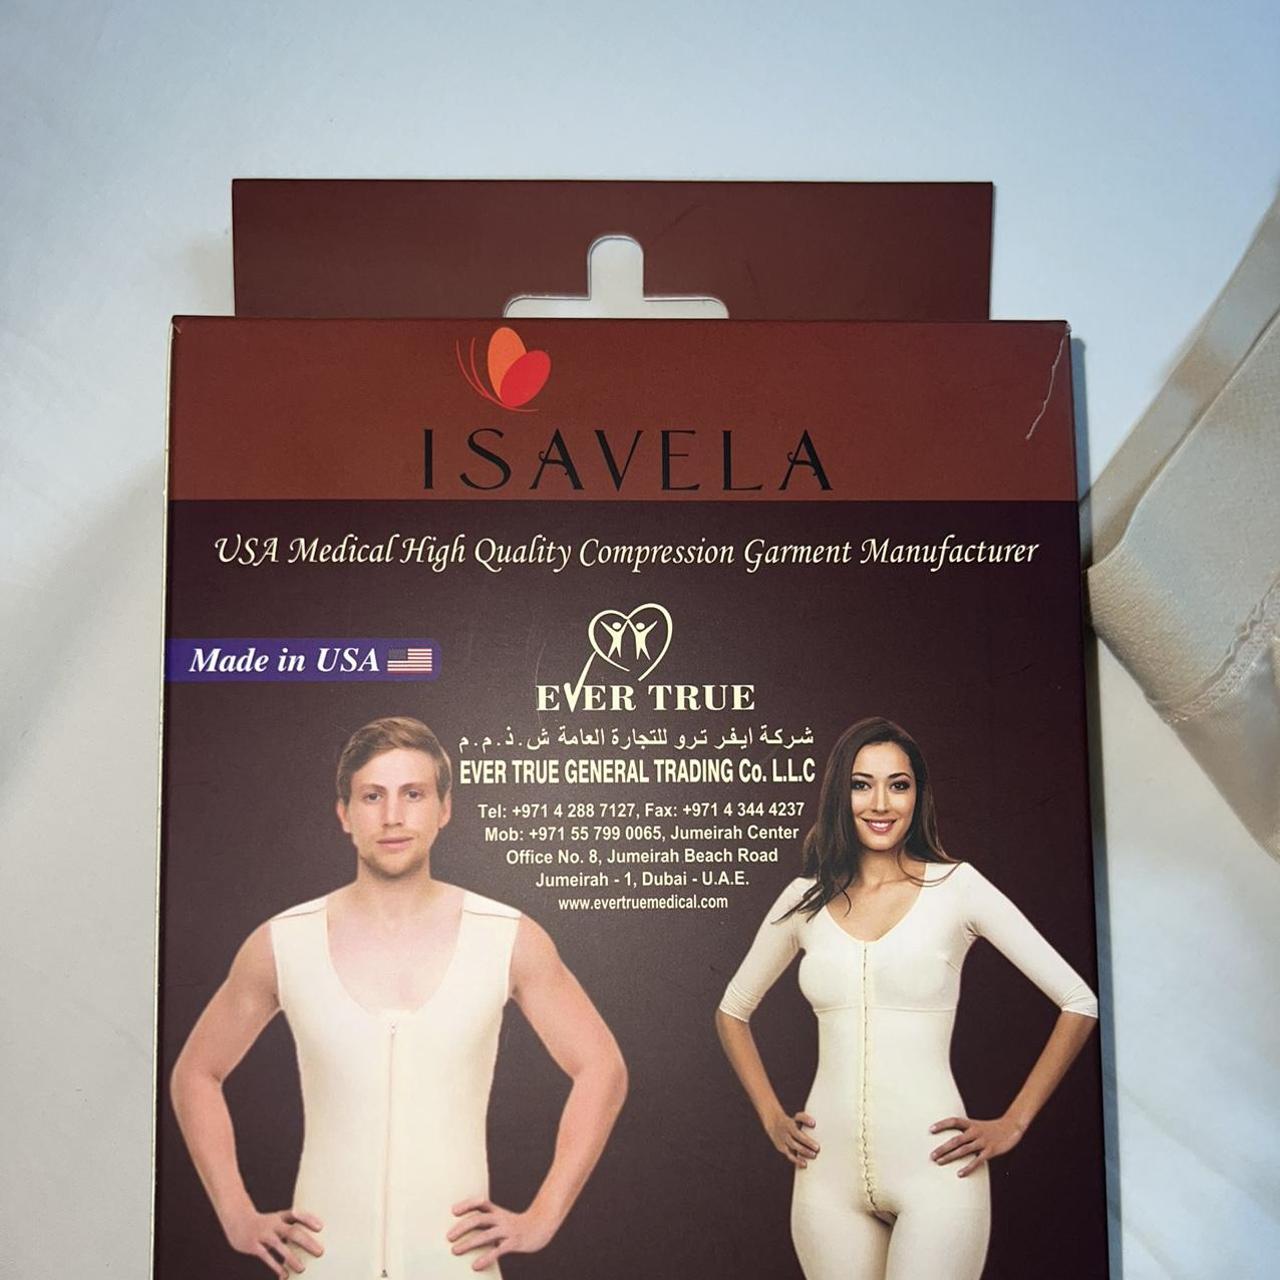 Buy Isavela in California